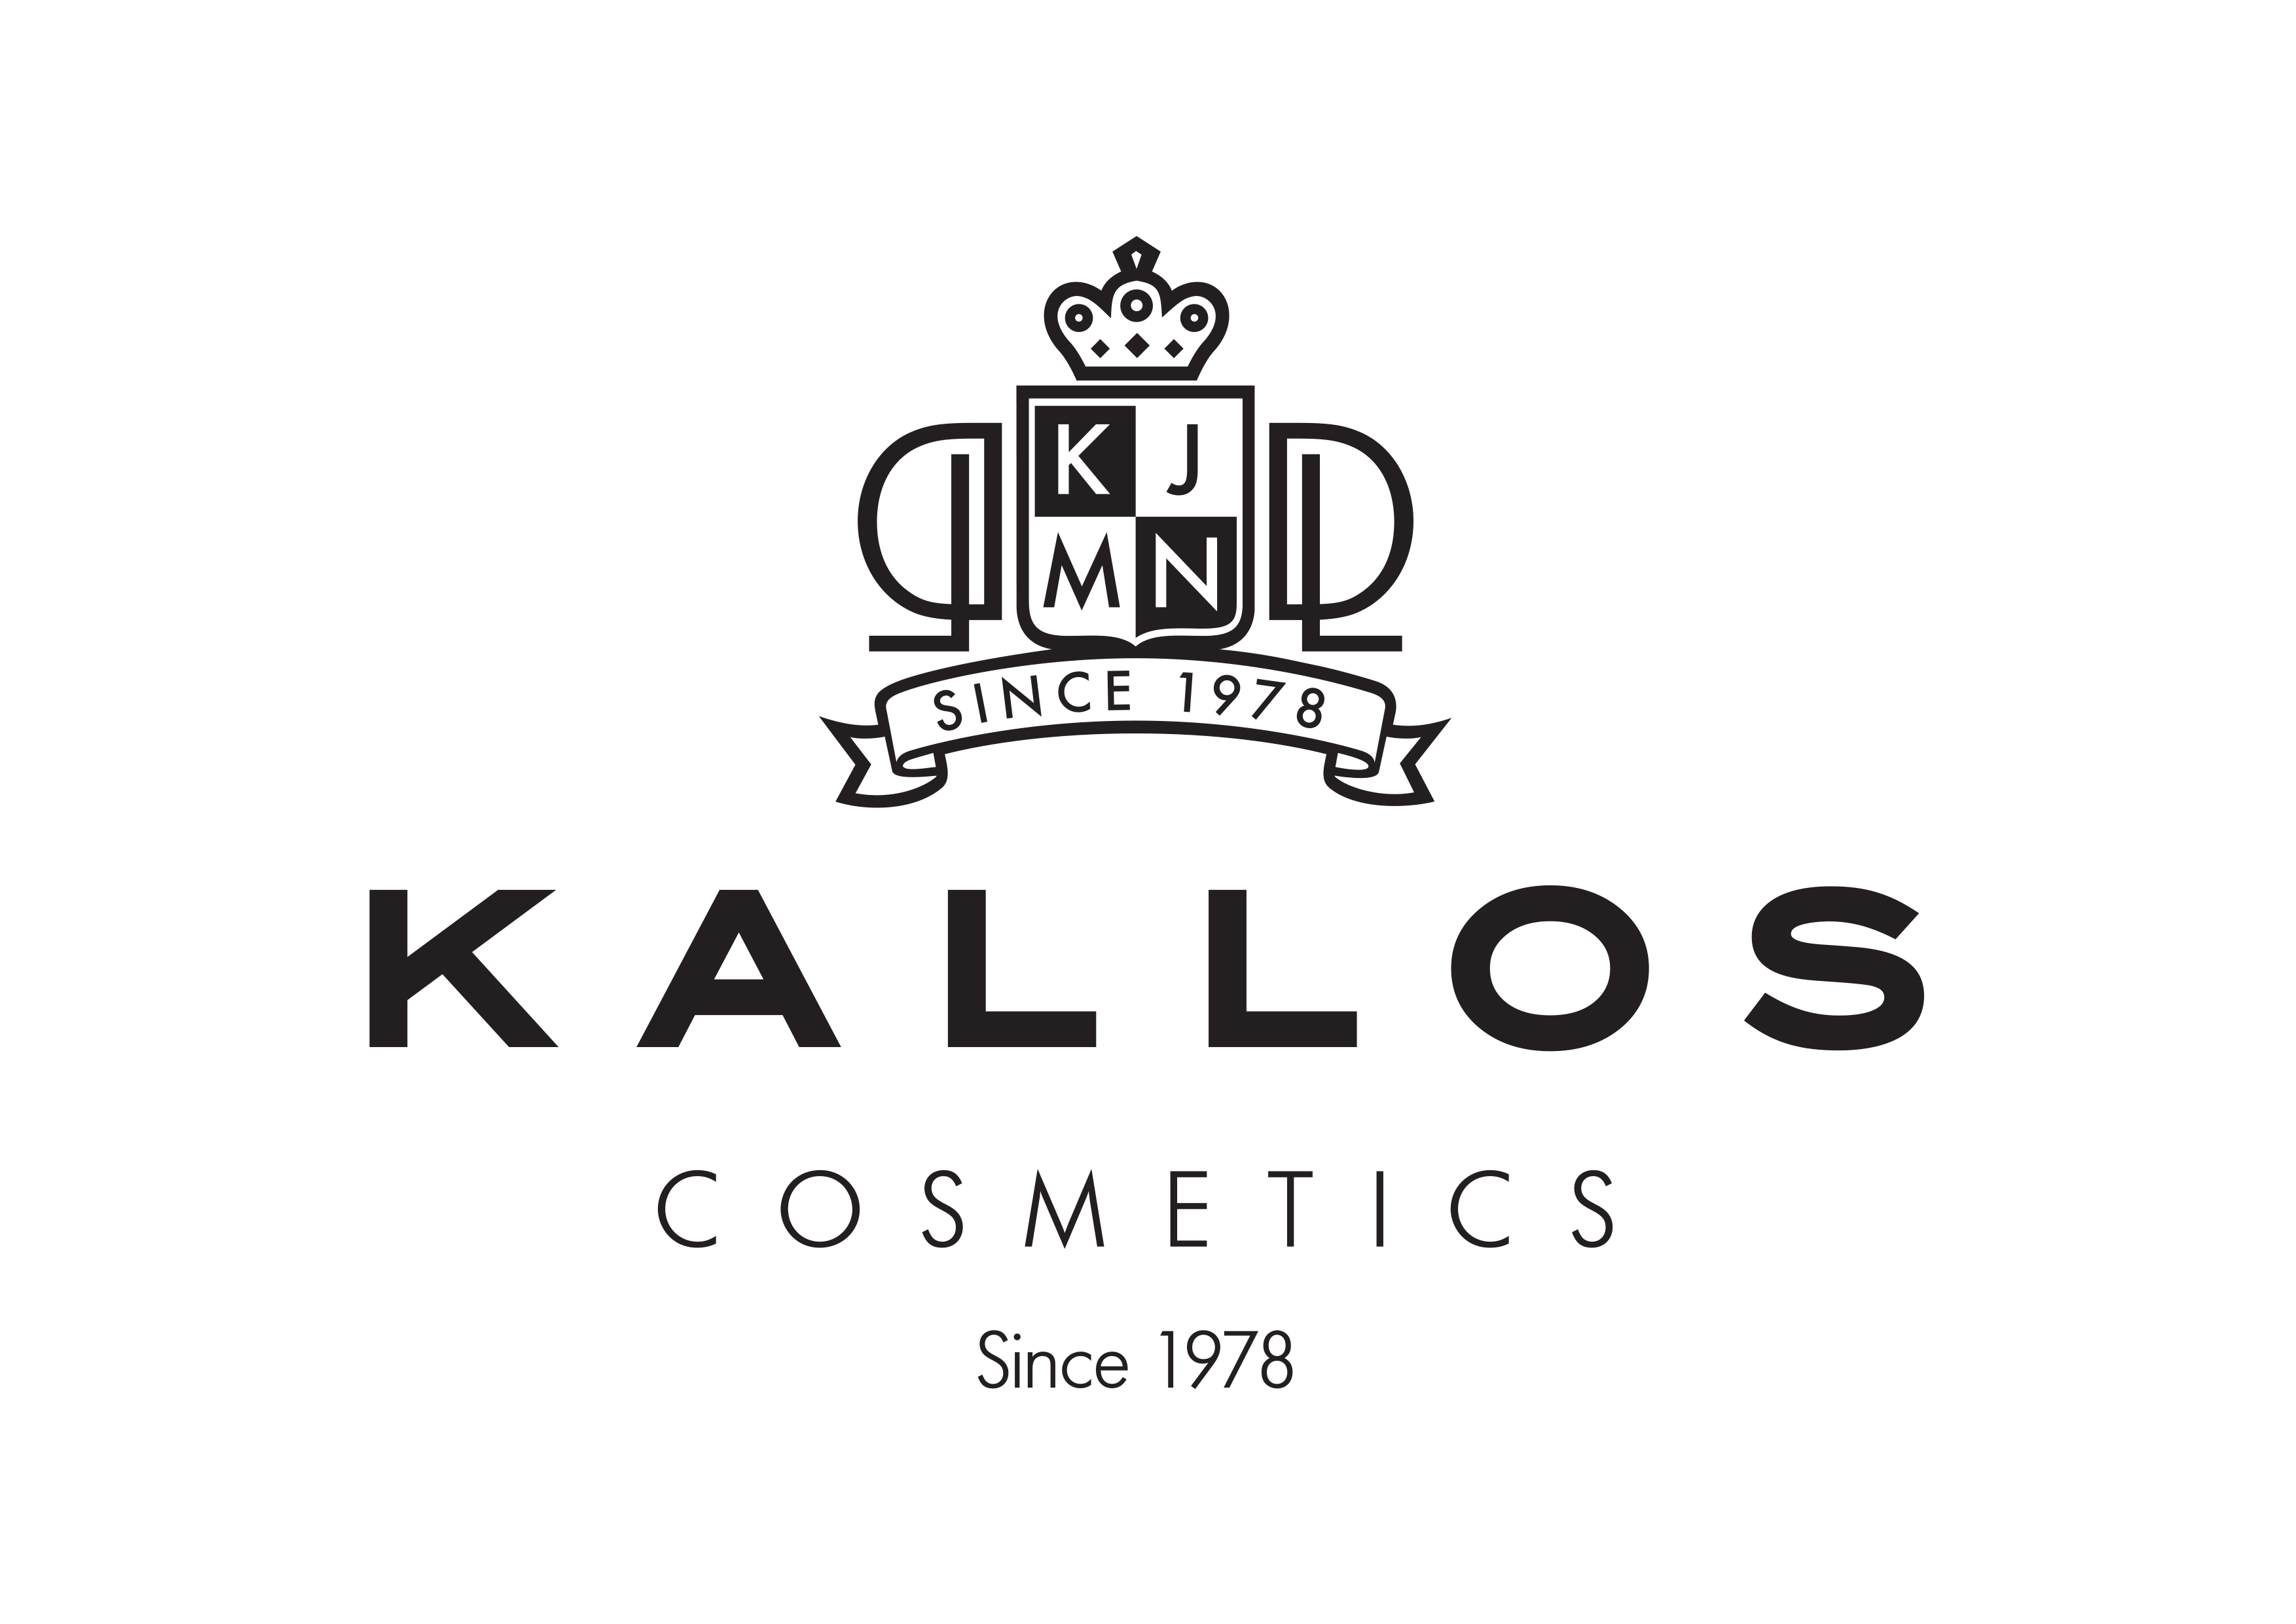 Kallos magazine